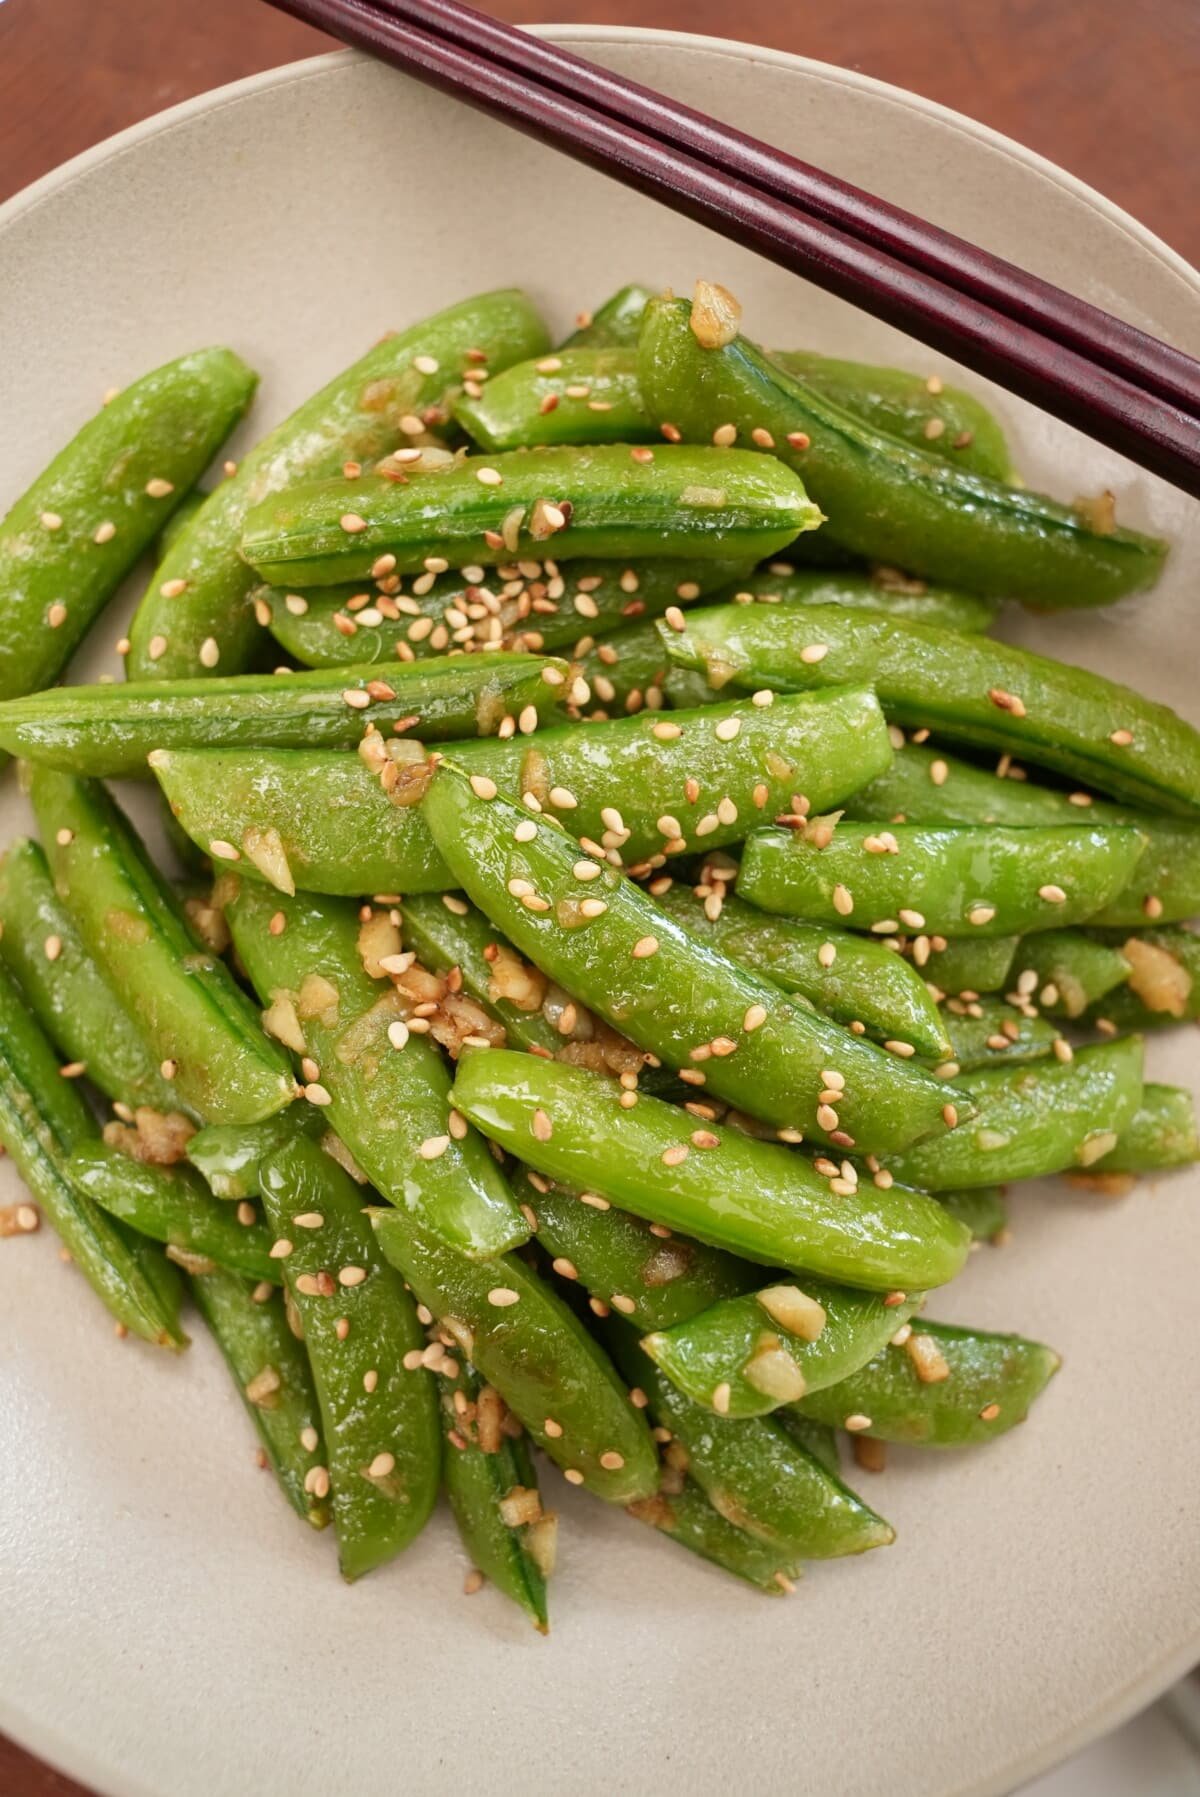 Sesame garlic snap peas in a bowl with chopsticks.